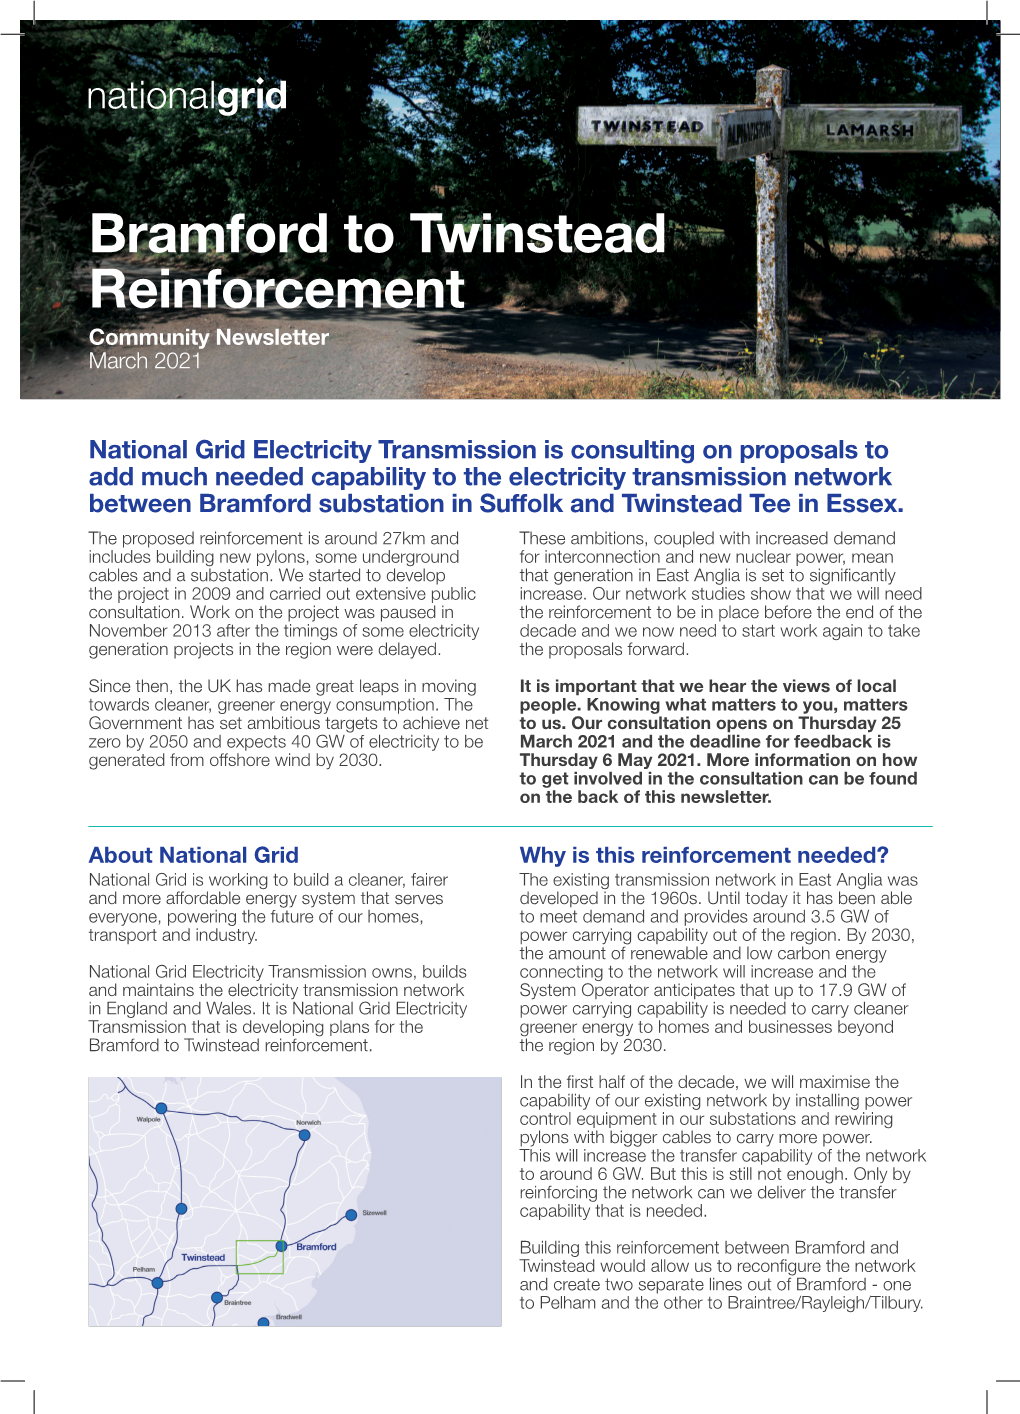 Bramford to Twinstead Newsletter